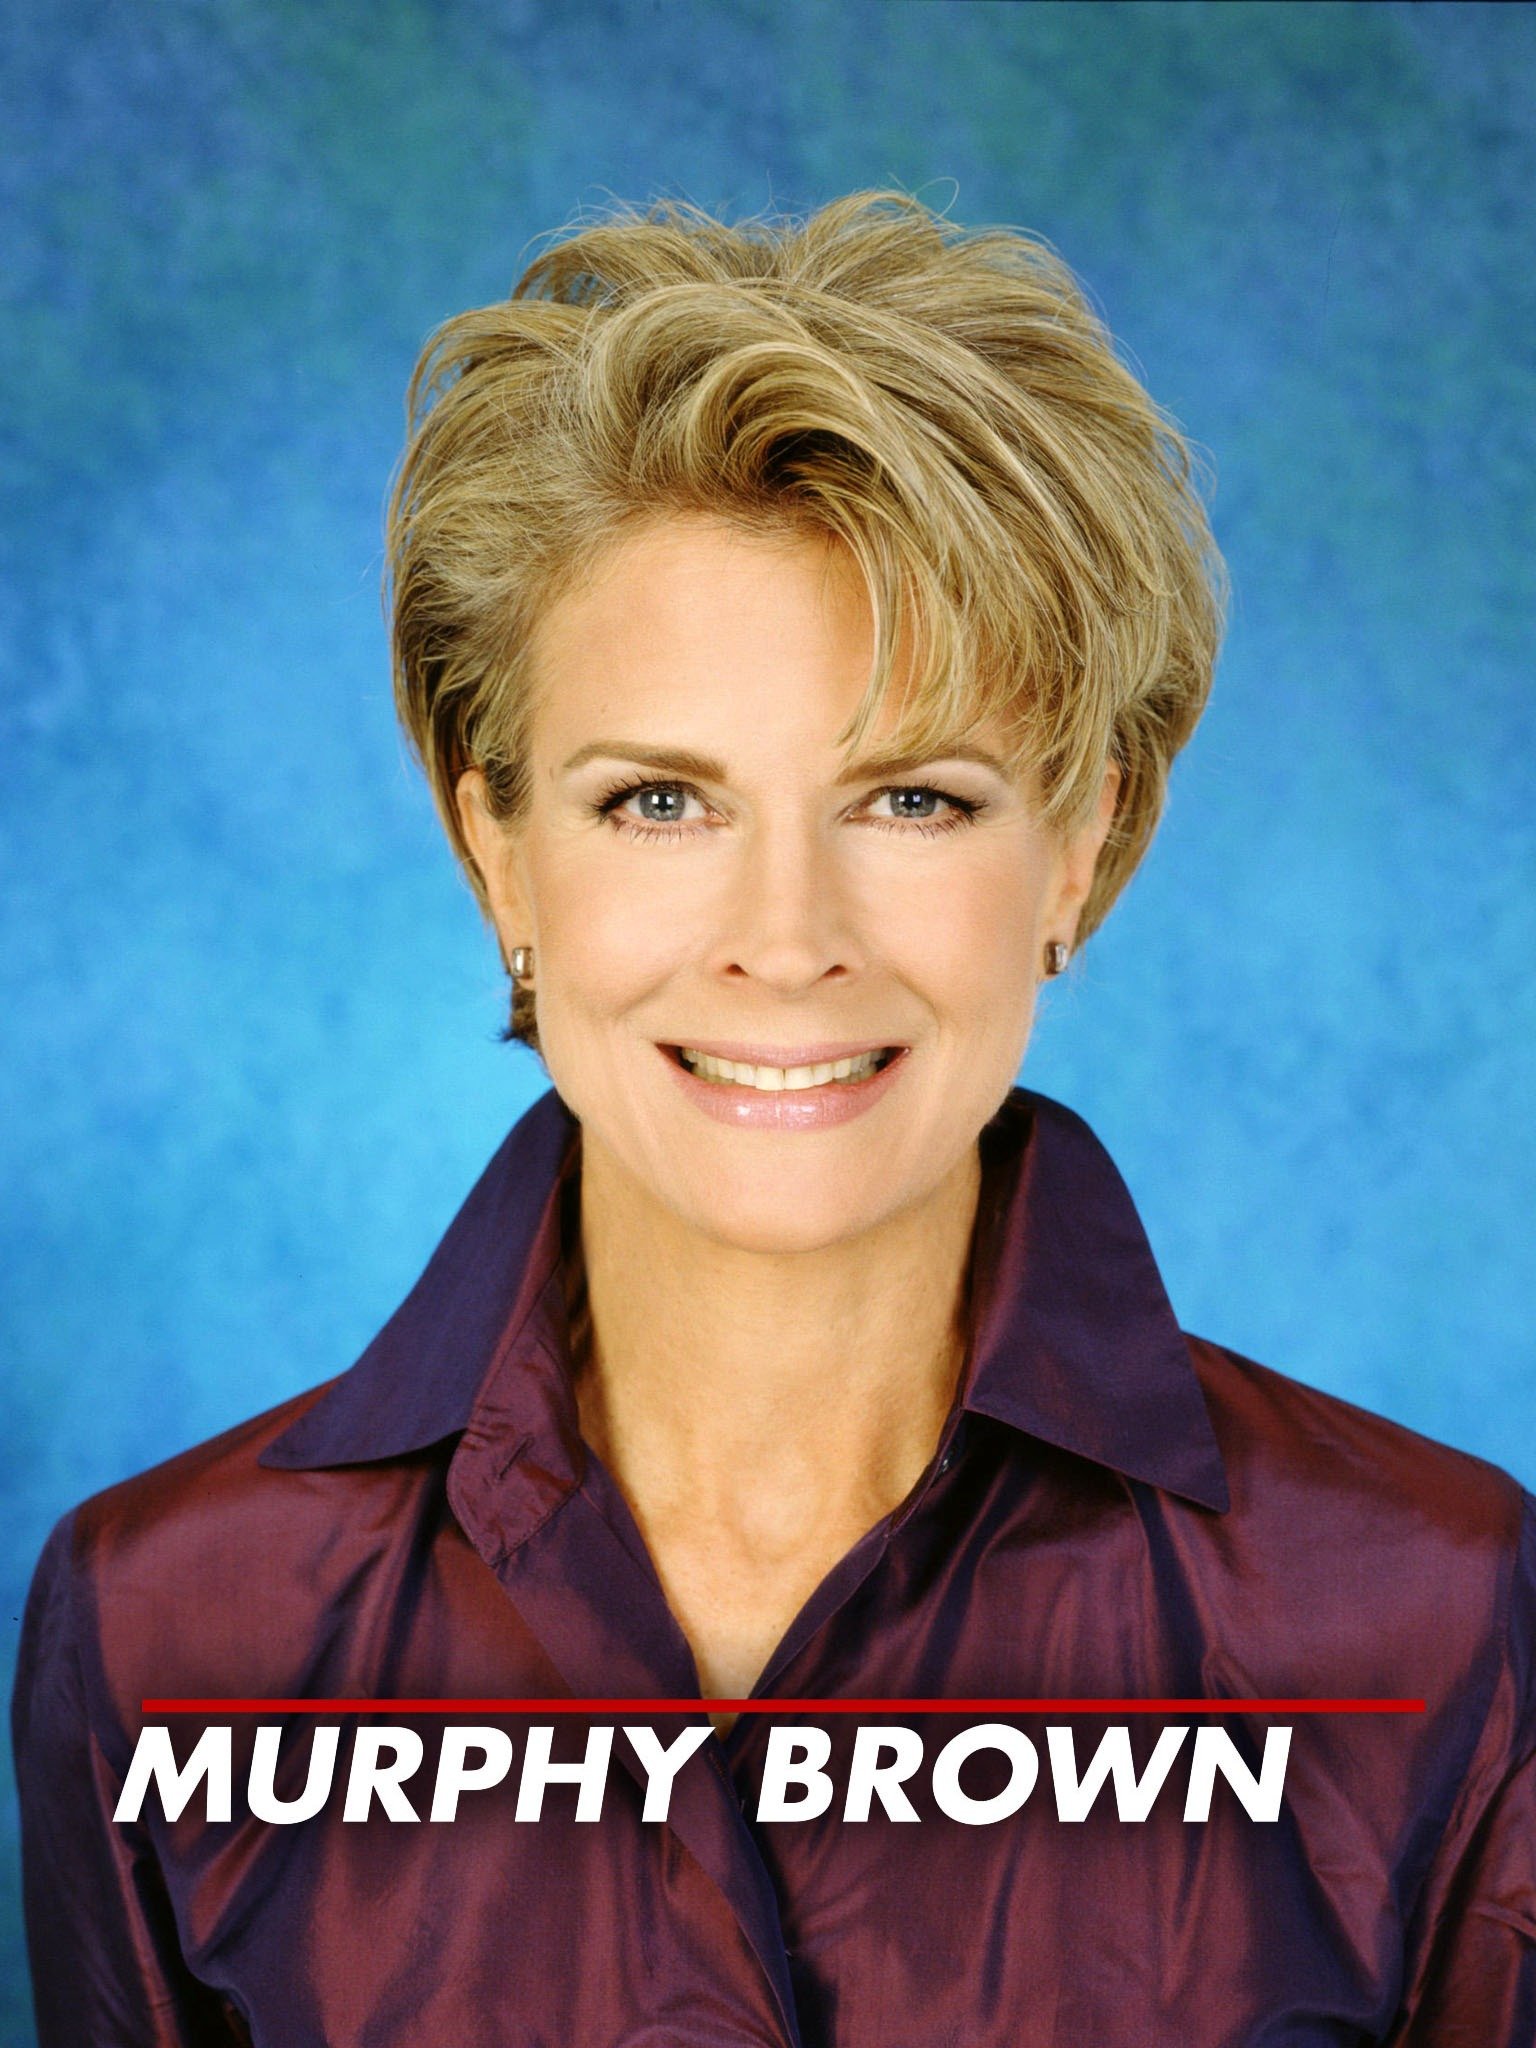 Murphy brown